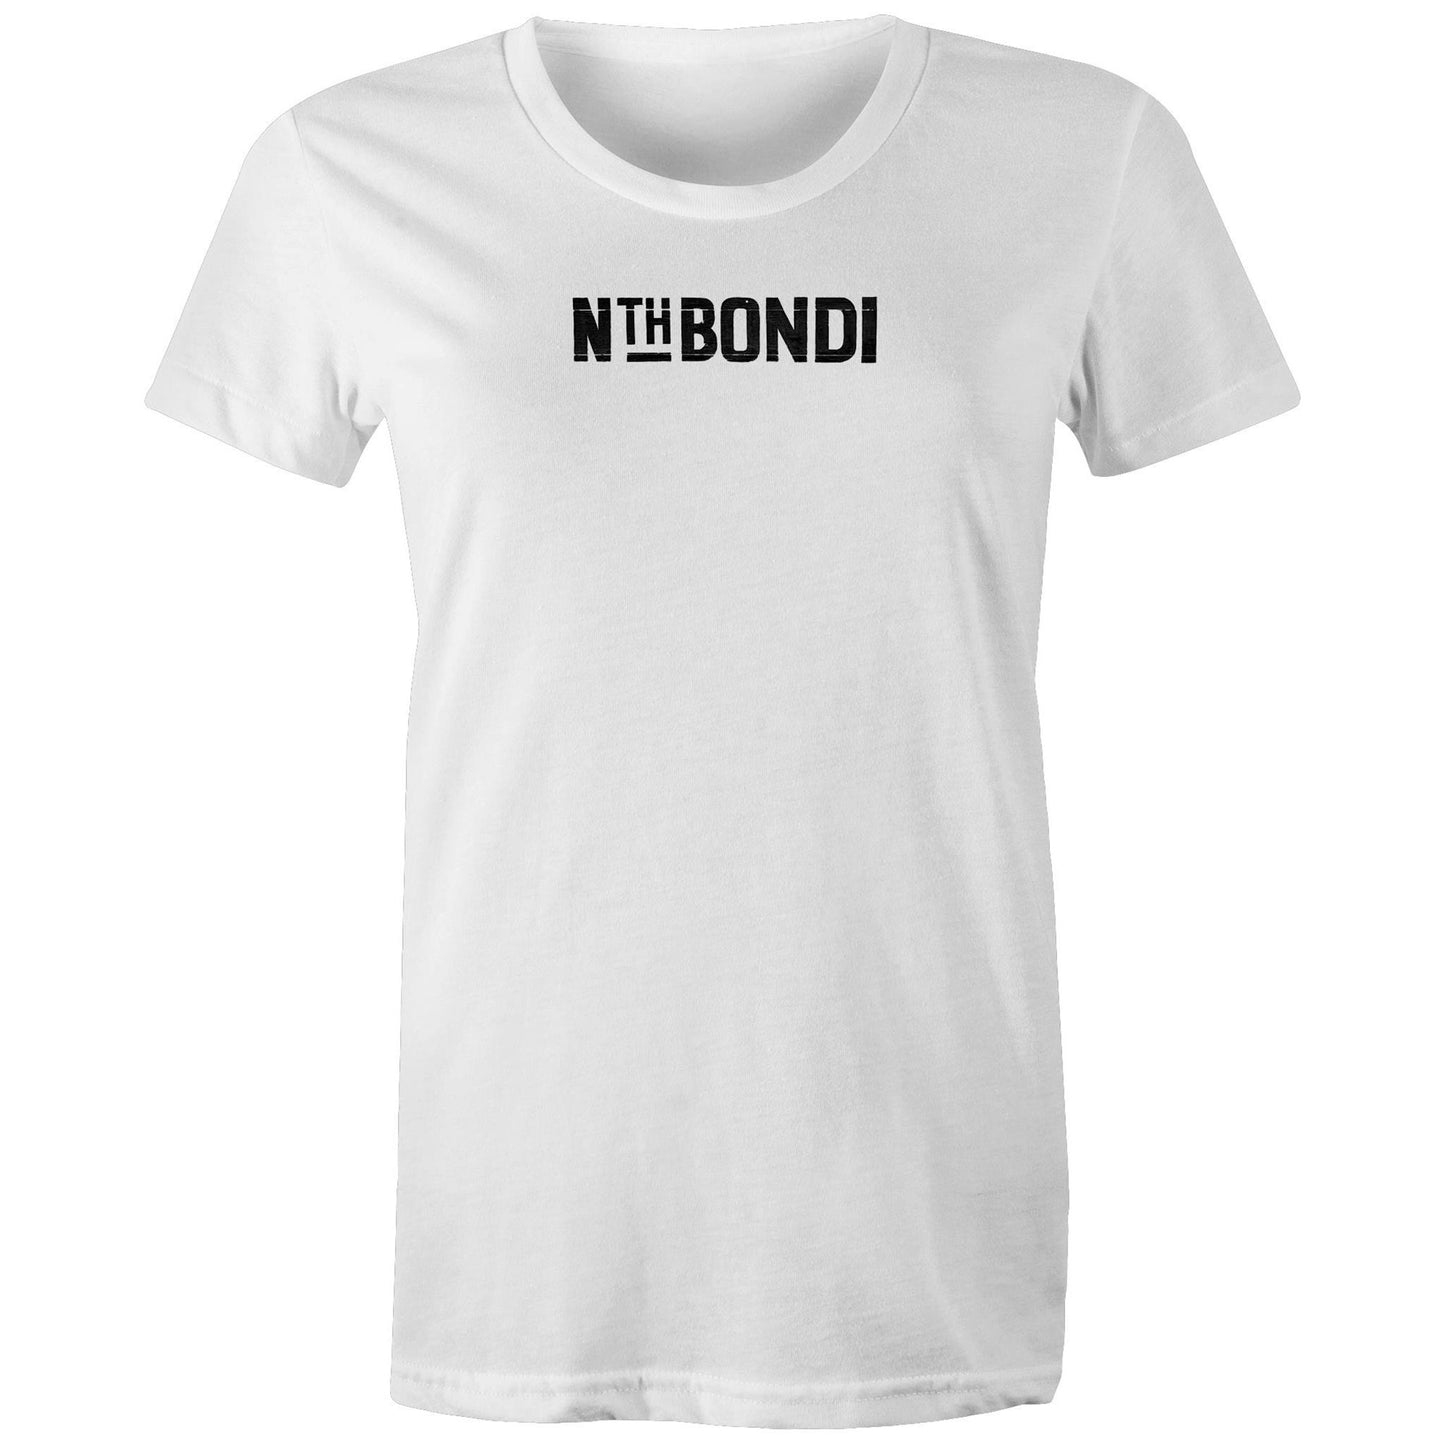 Nth BONDI T Shirts for Women